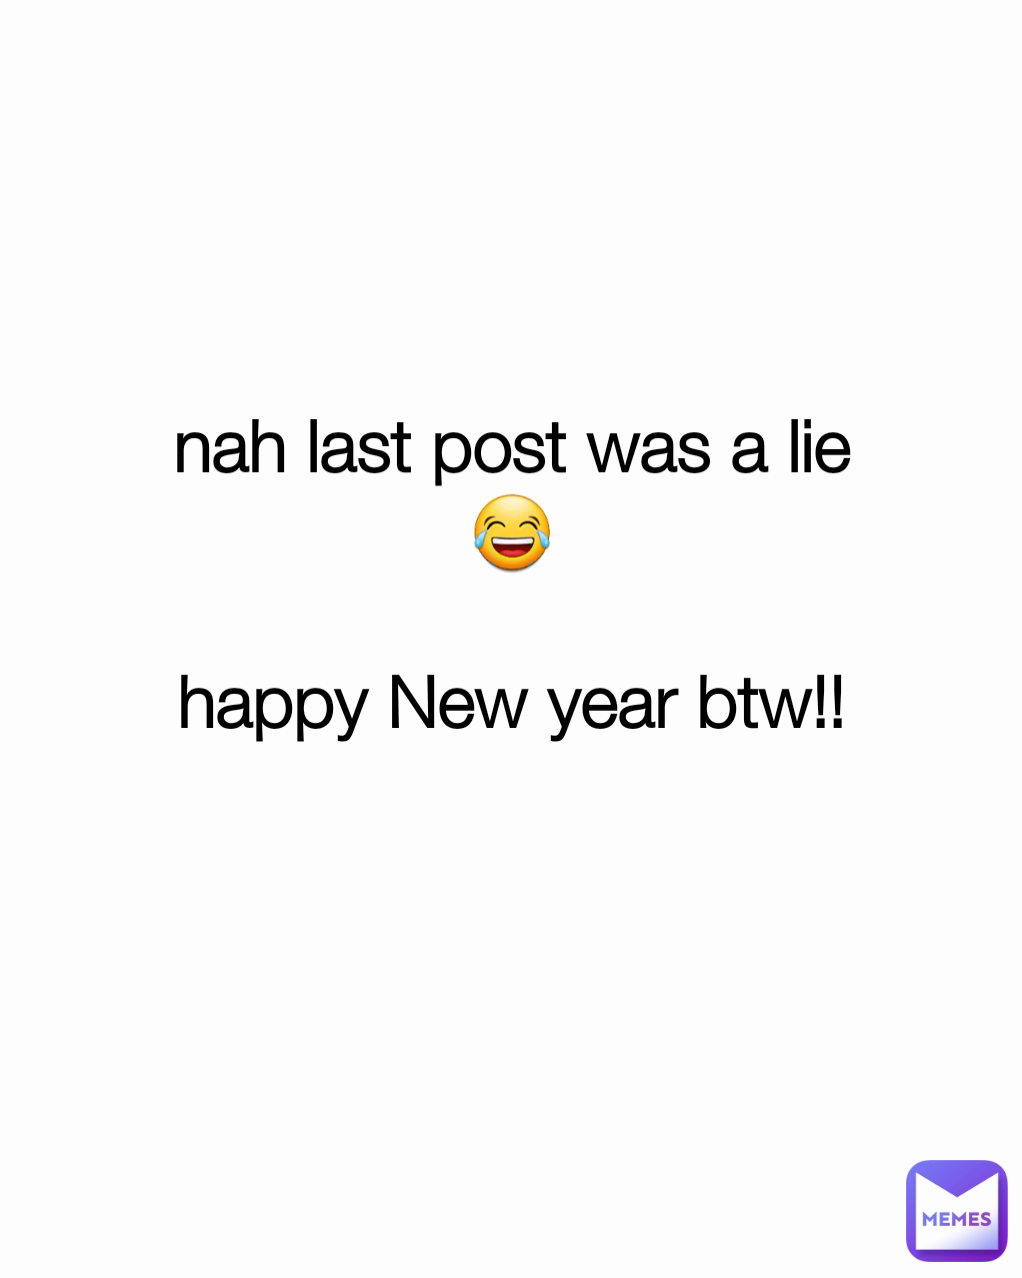 nah last post was a lie
😂

happy New year btw!!